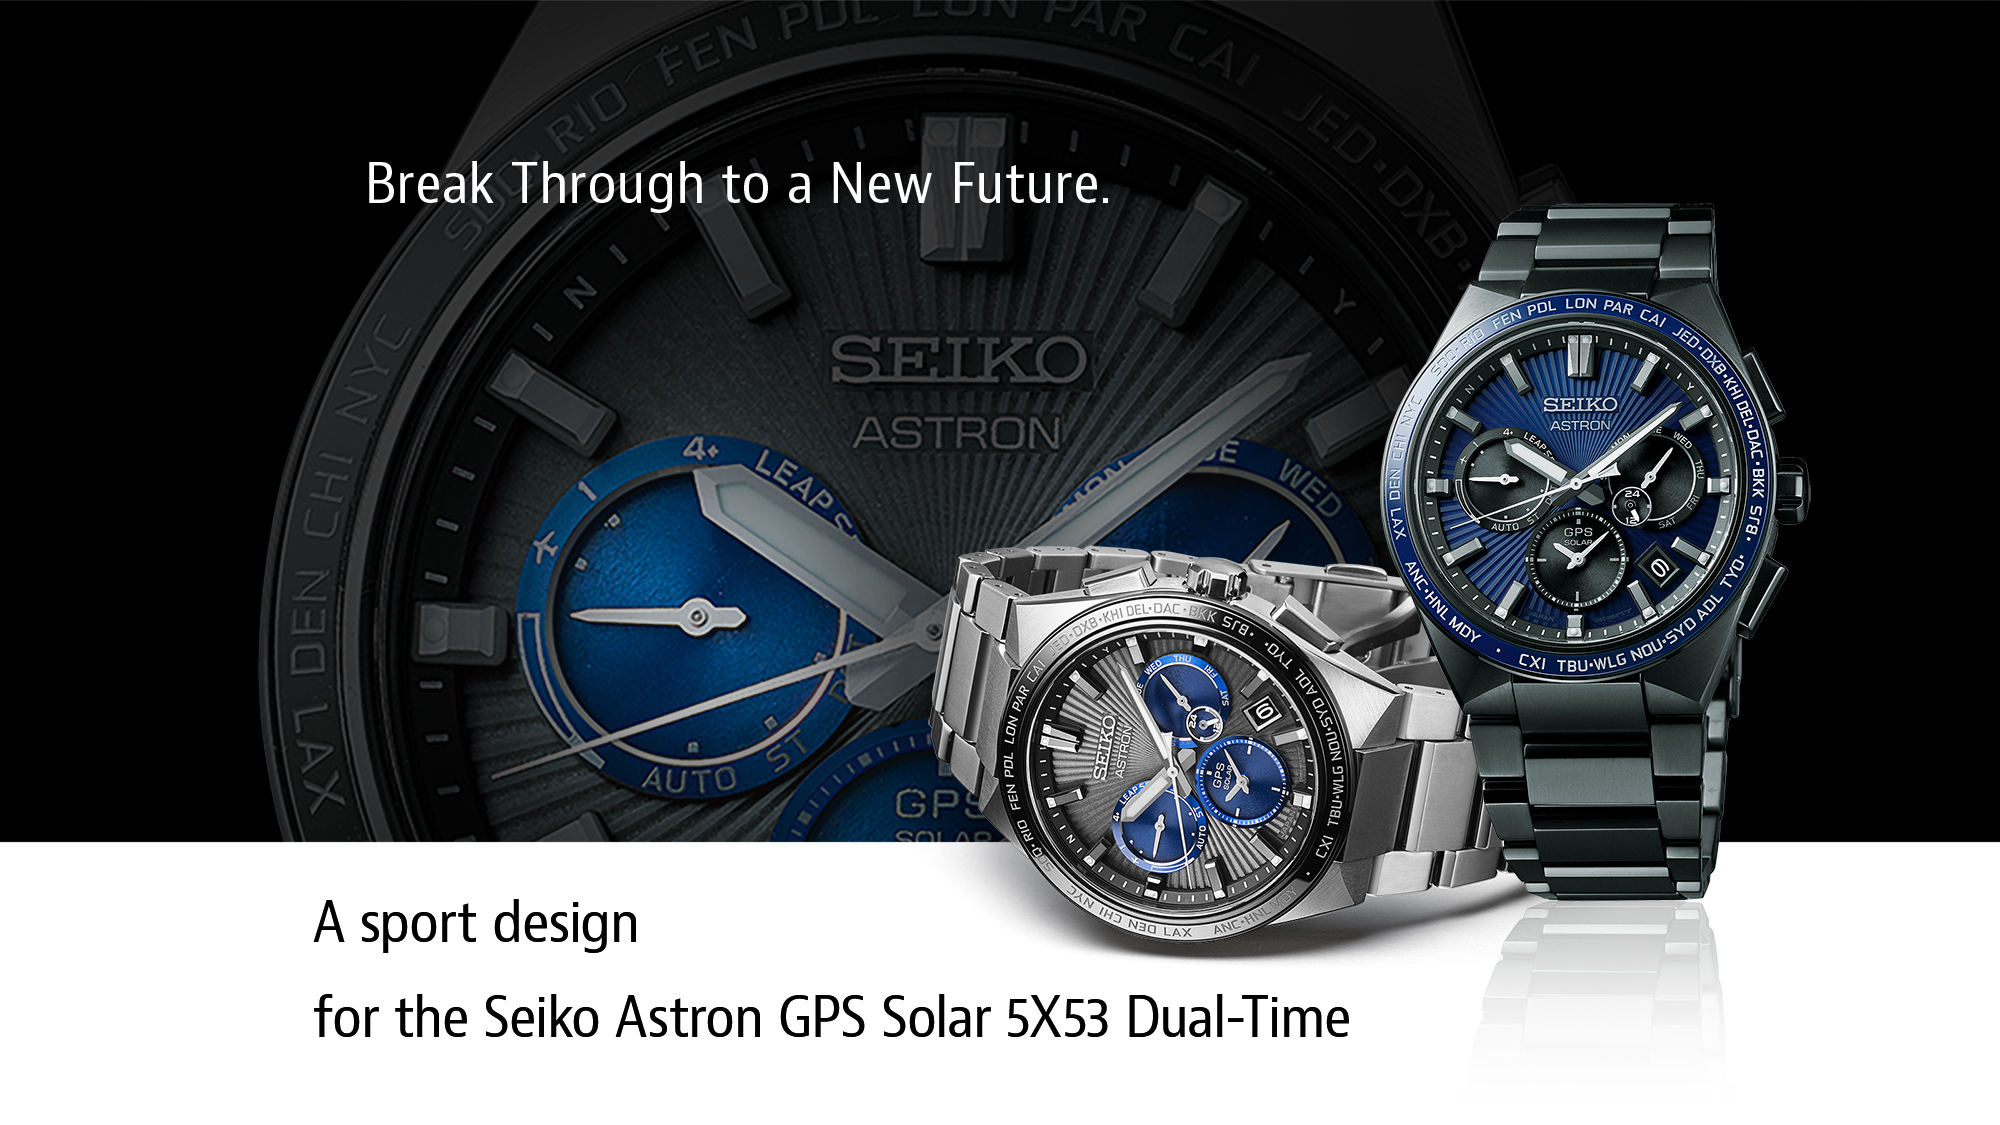 The Seiko Astron GPS Solar Sport design